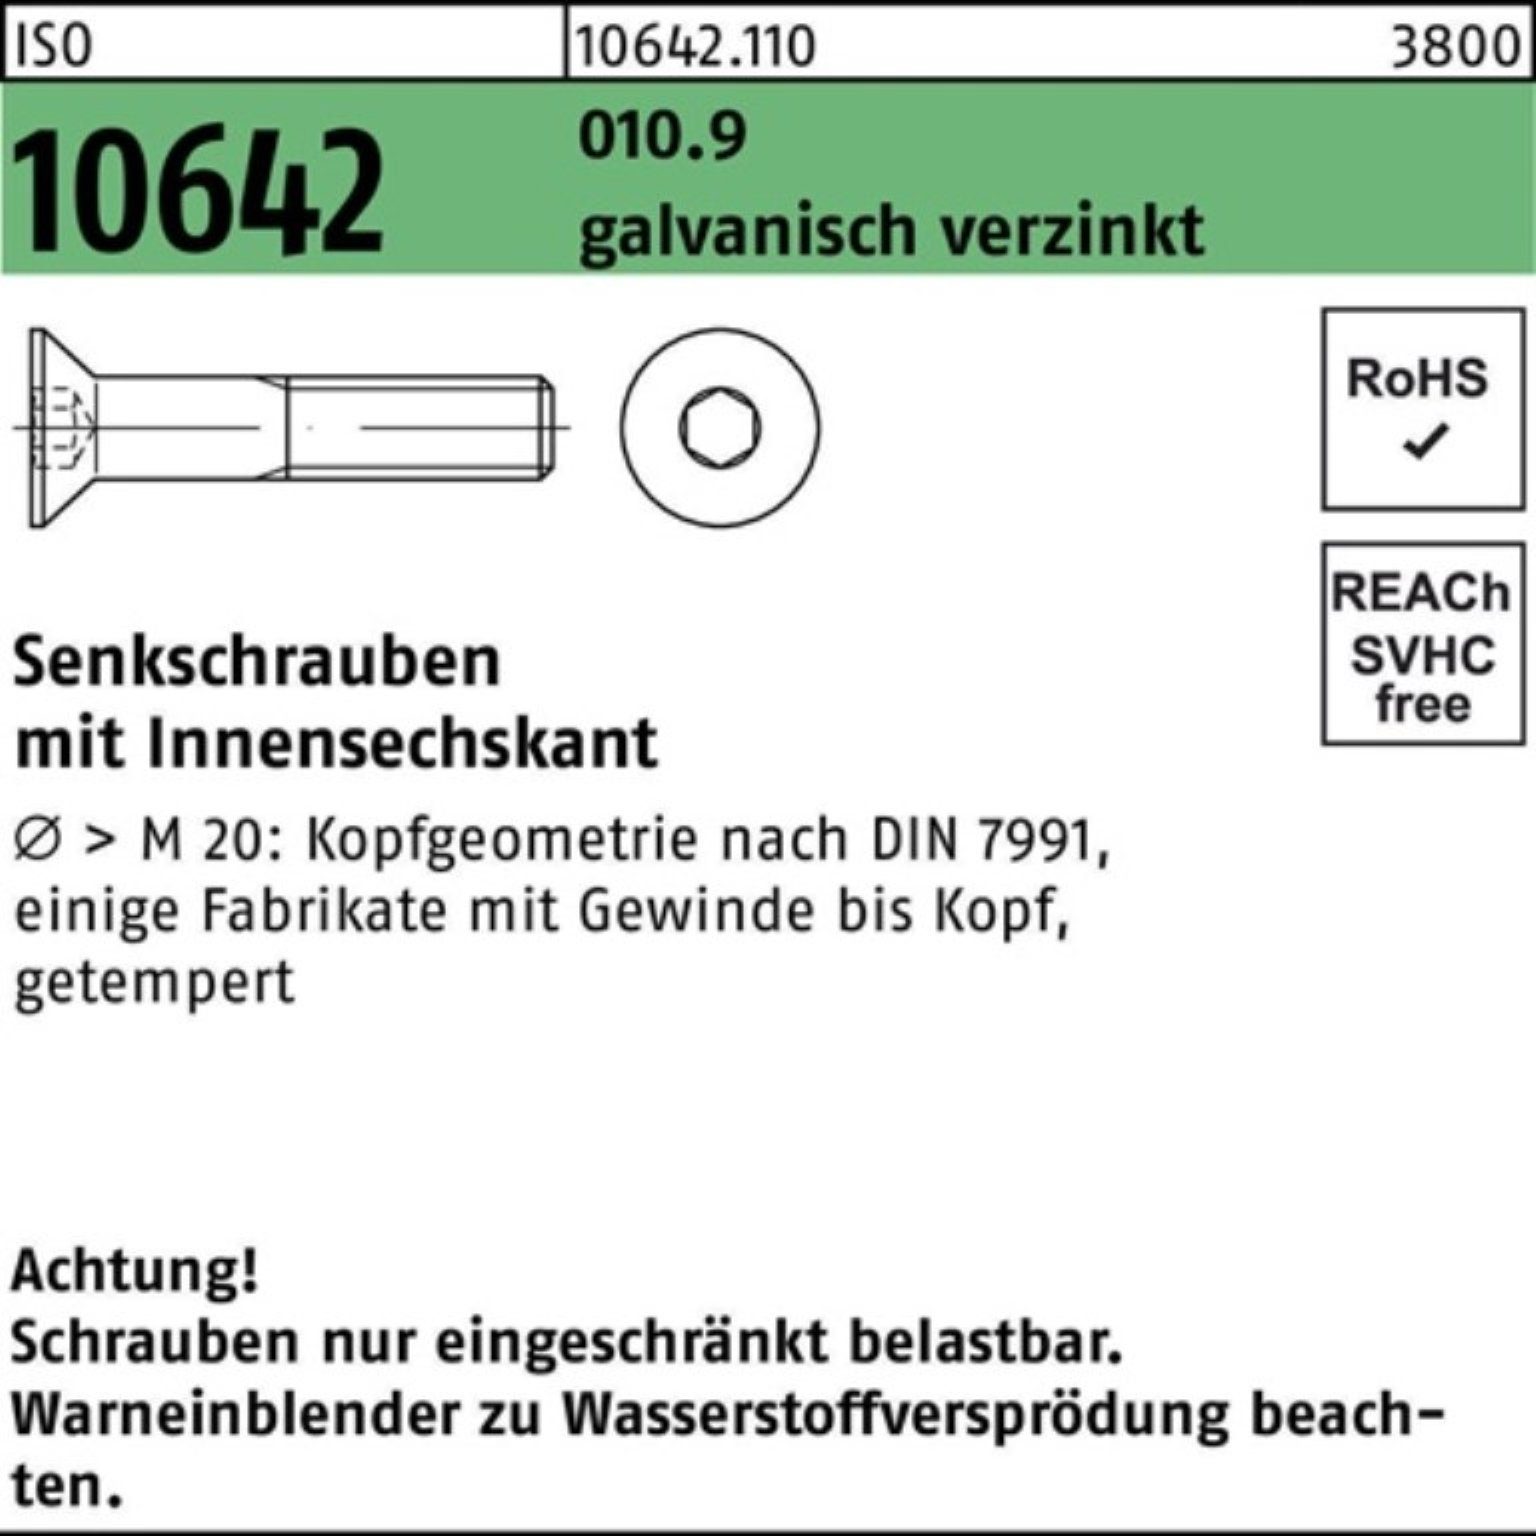 Reyher Senkschraube 500er Pack Senkschraube ISO 10642 Innen-6kt M4x 16 010.9 galv.verz. 50